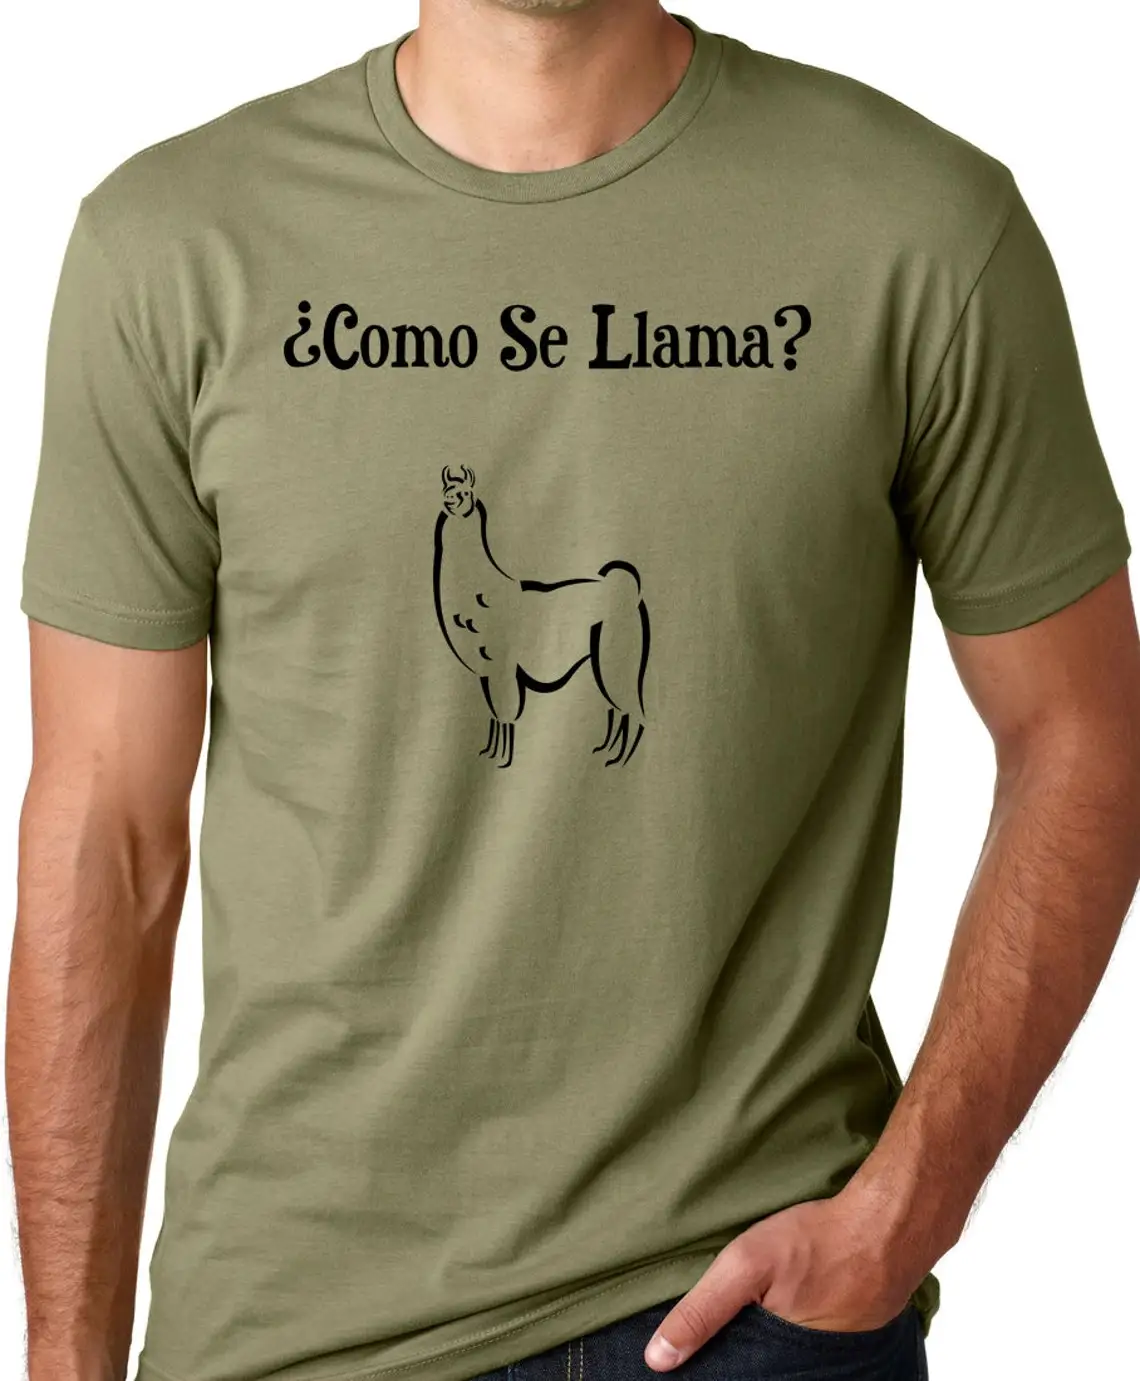 

Como se llama funny T shirt spanish Humor Tee Funny spanish gift shirt for Mexican Latino hispanic funny alpaca shirt gift